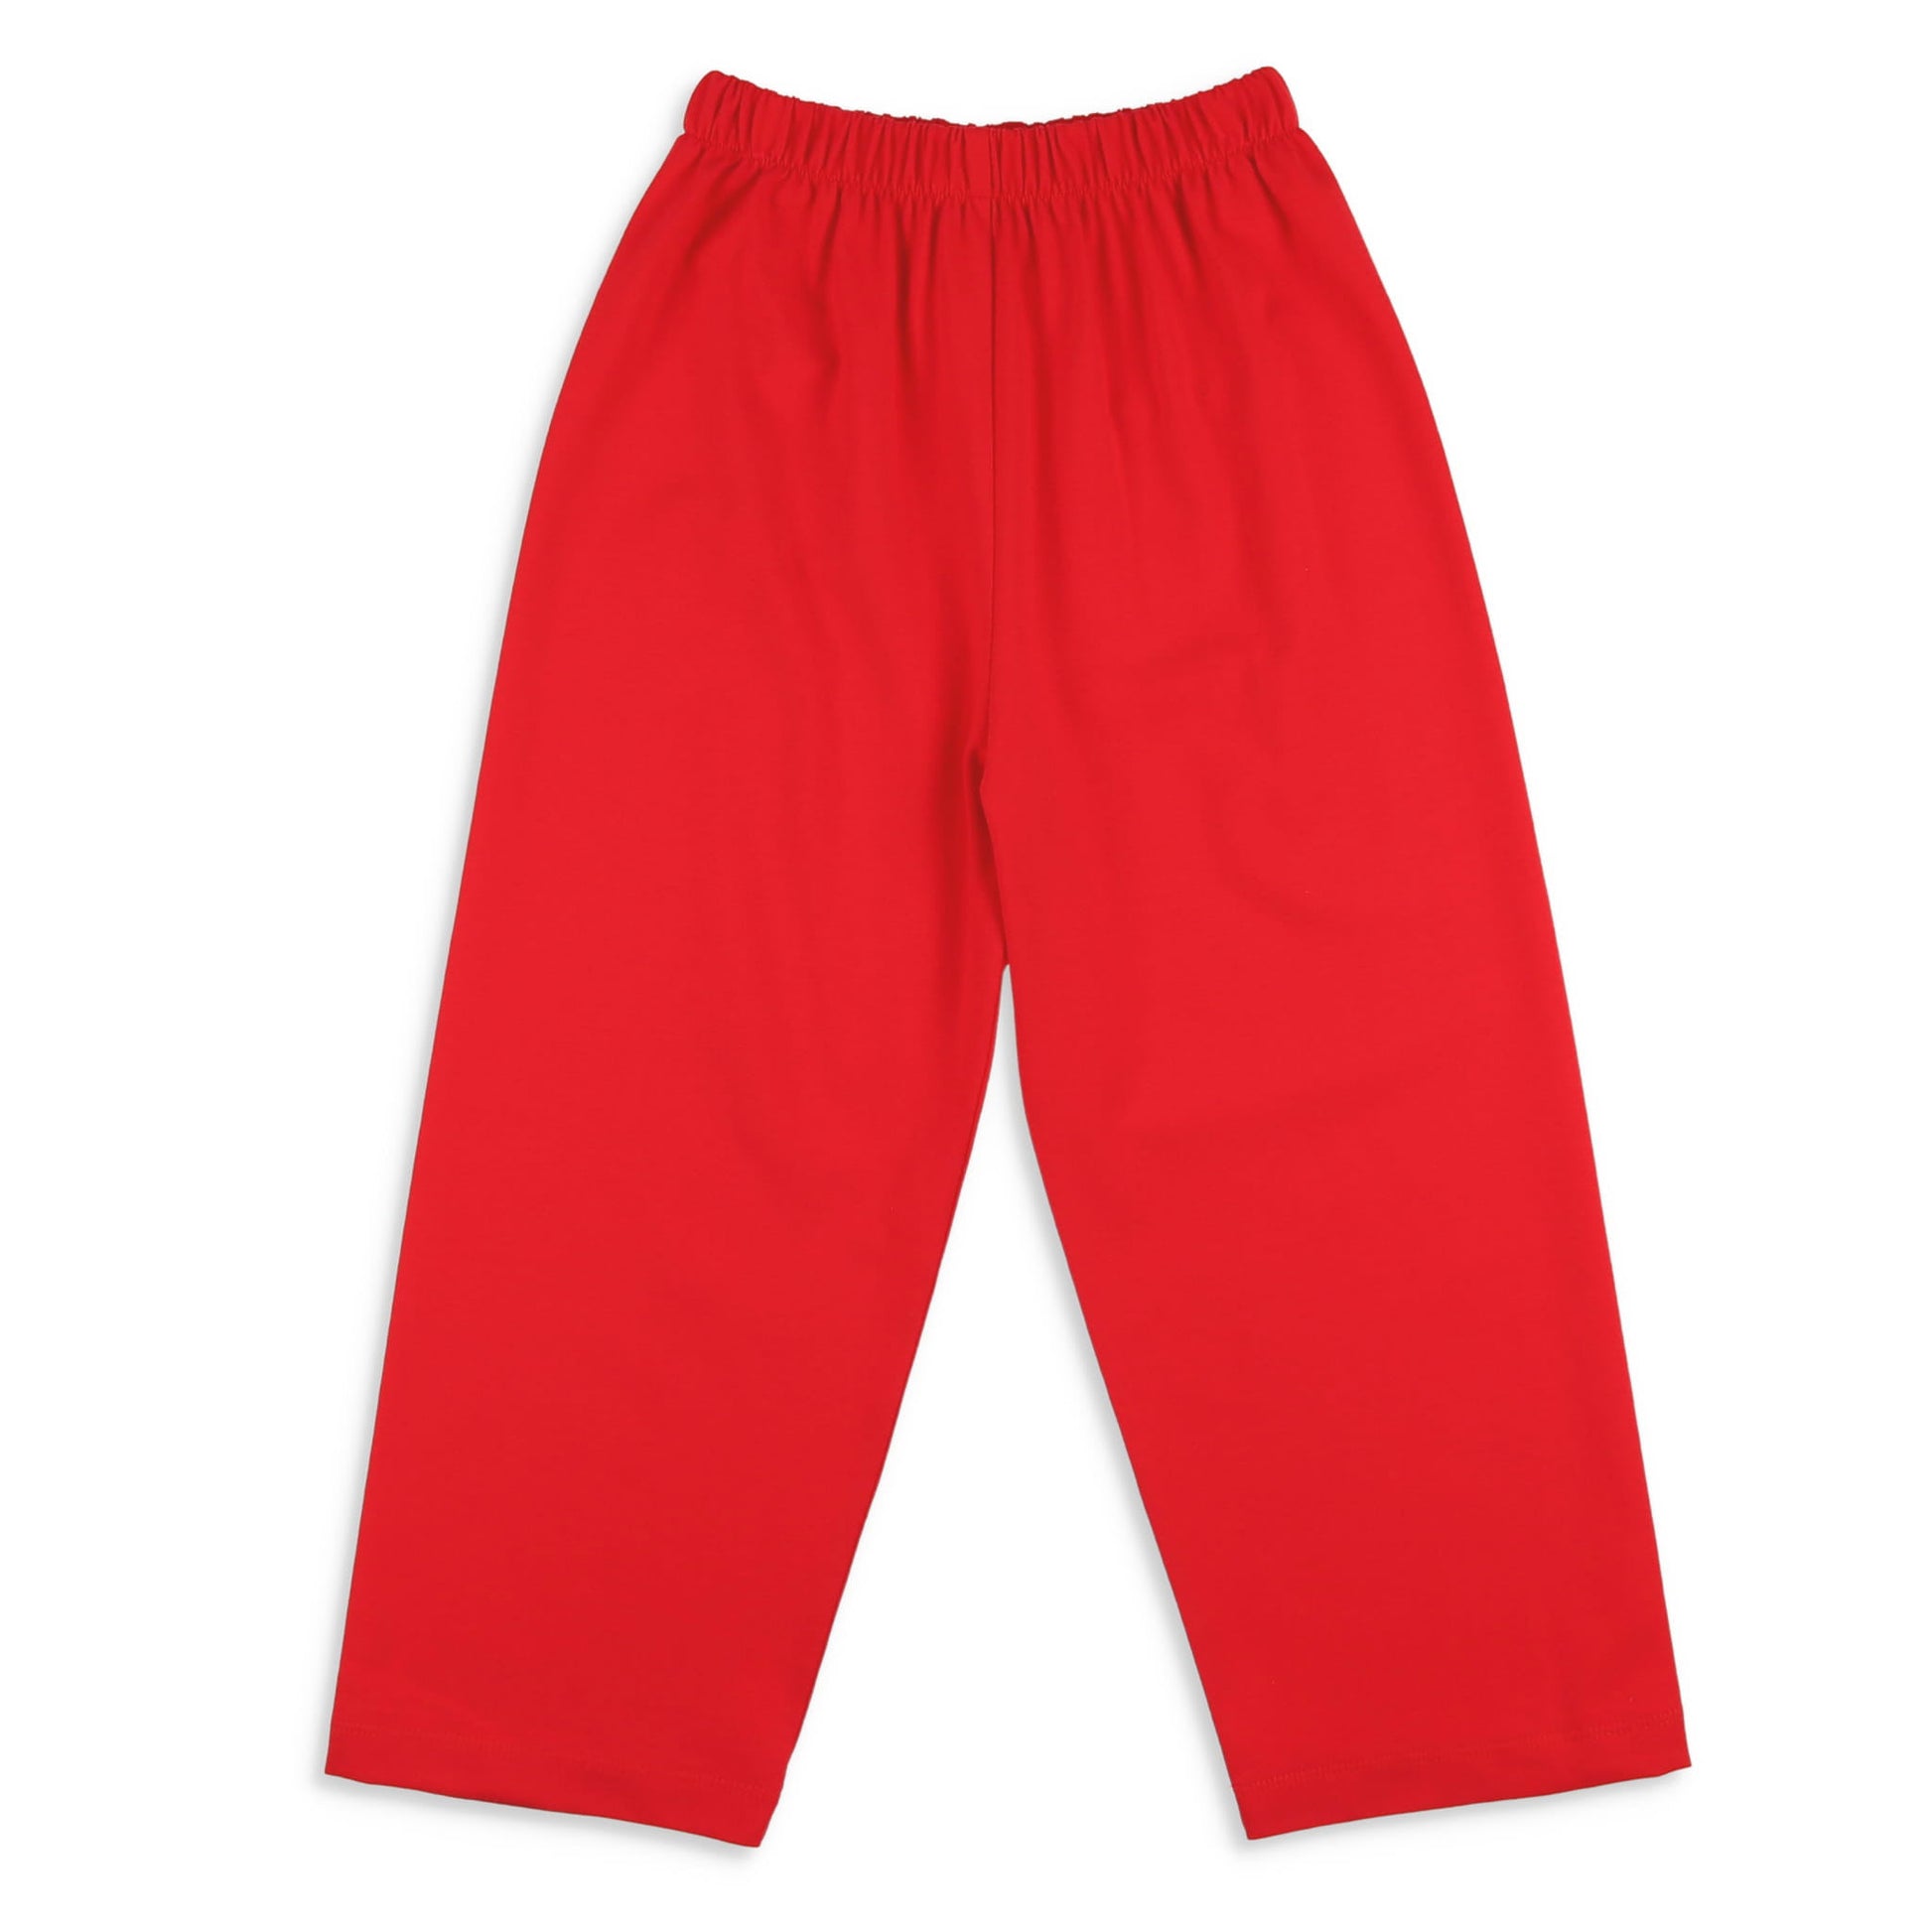 Boys Red Knit Pants - Shrimp and Grits Kids - Shrimp and Grits Kids